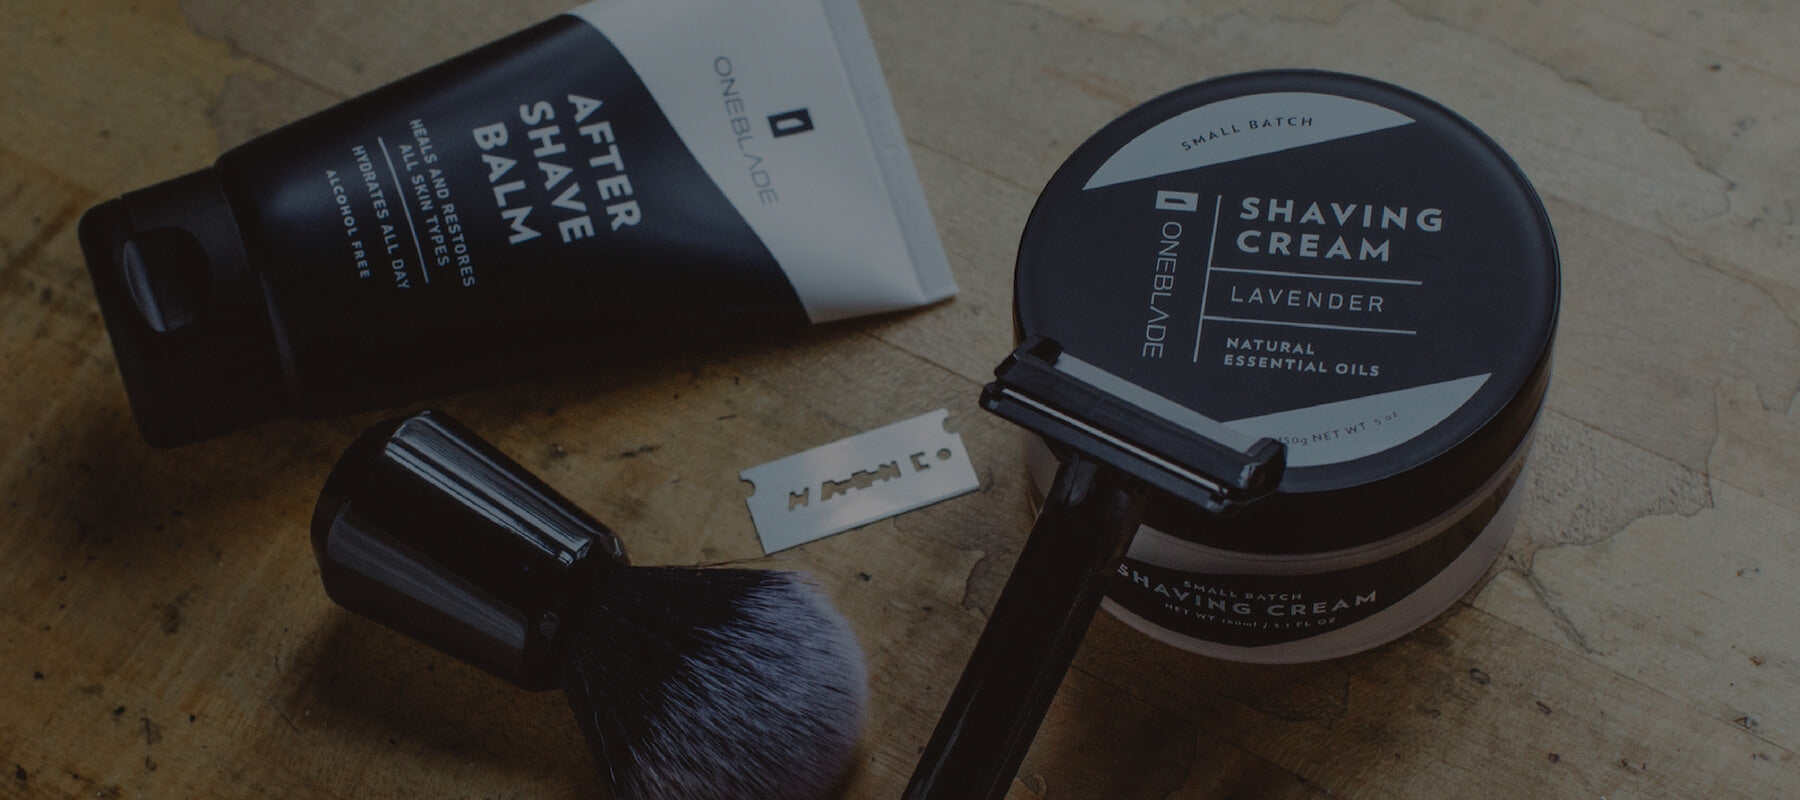 Inside Look: The New “Black Tie” Shaving Kit